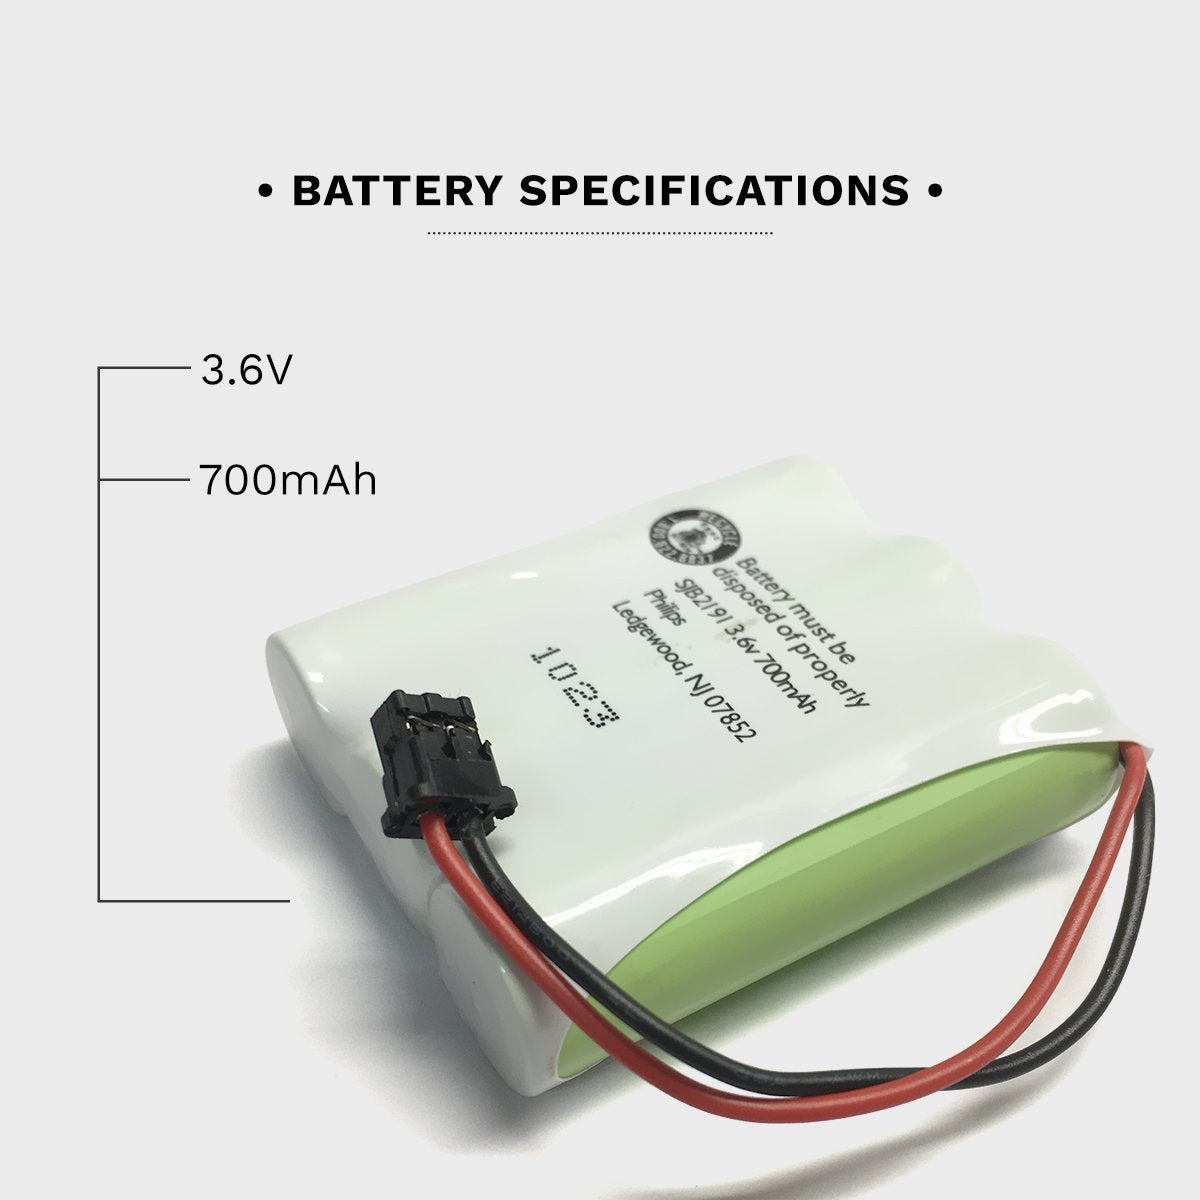 Sony SPP-D900 Cordless Phone Battery